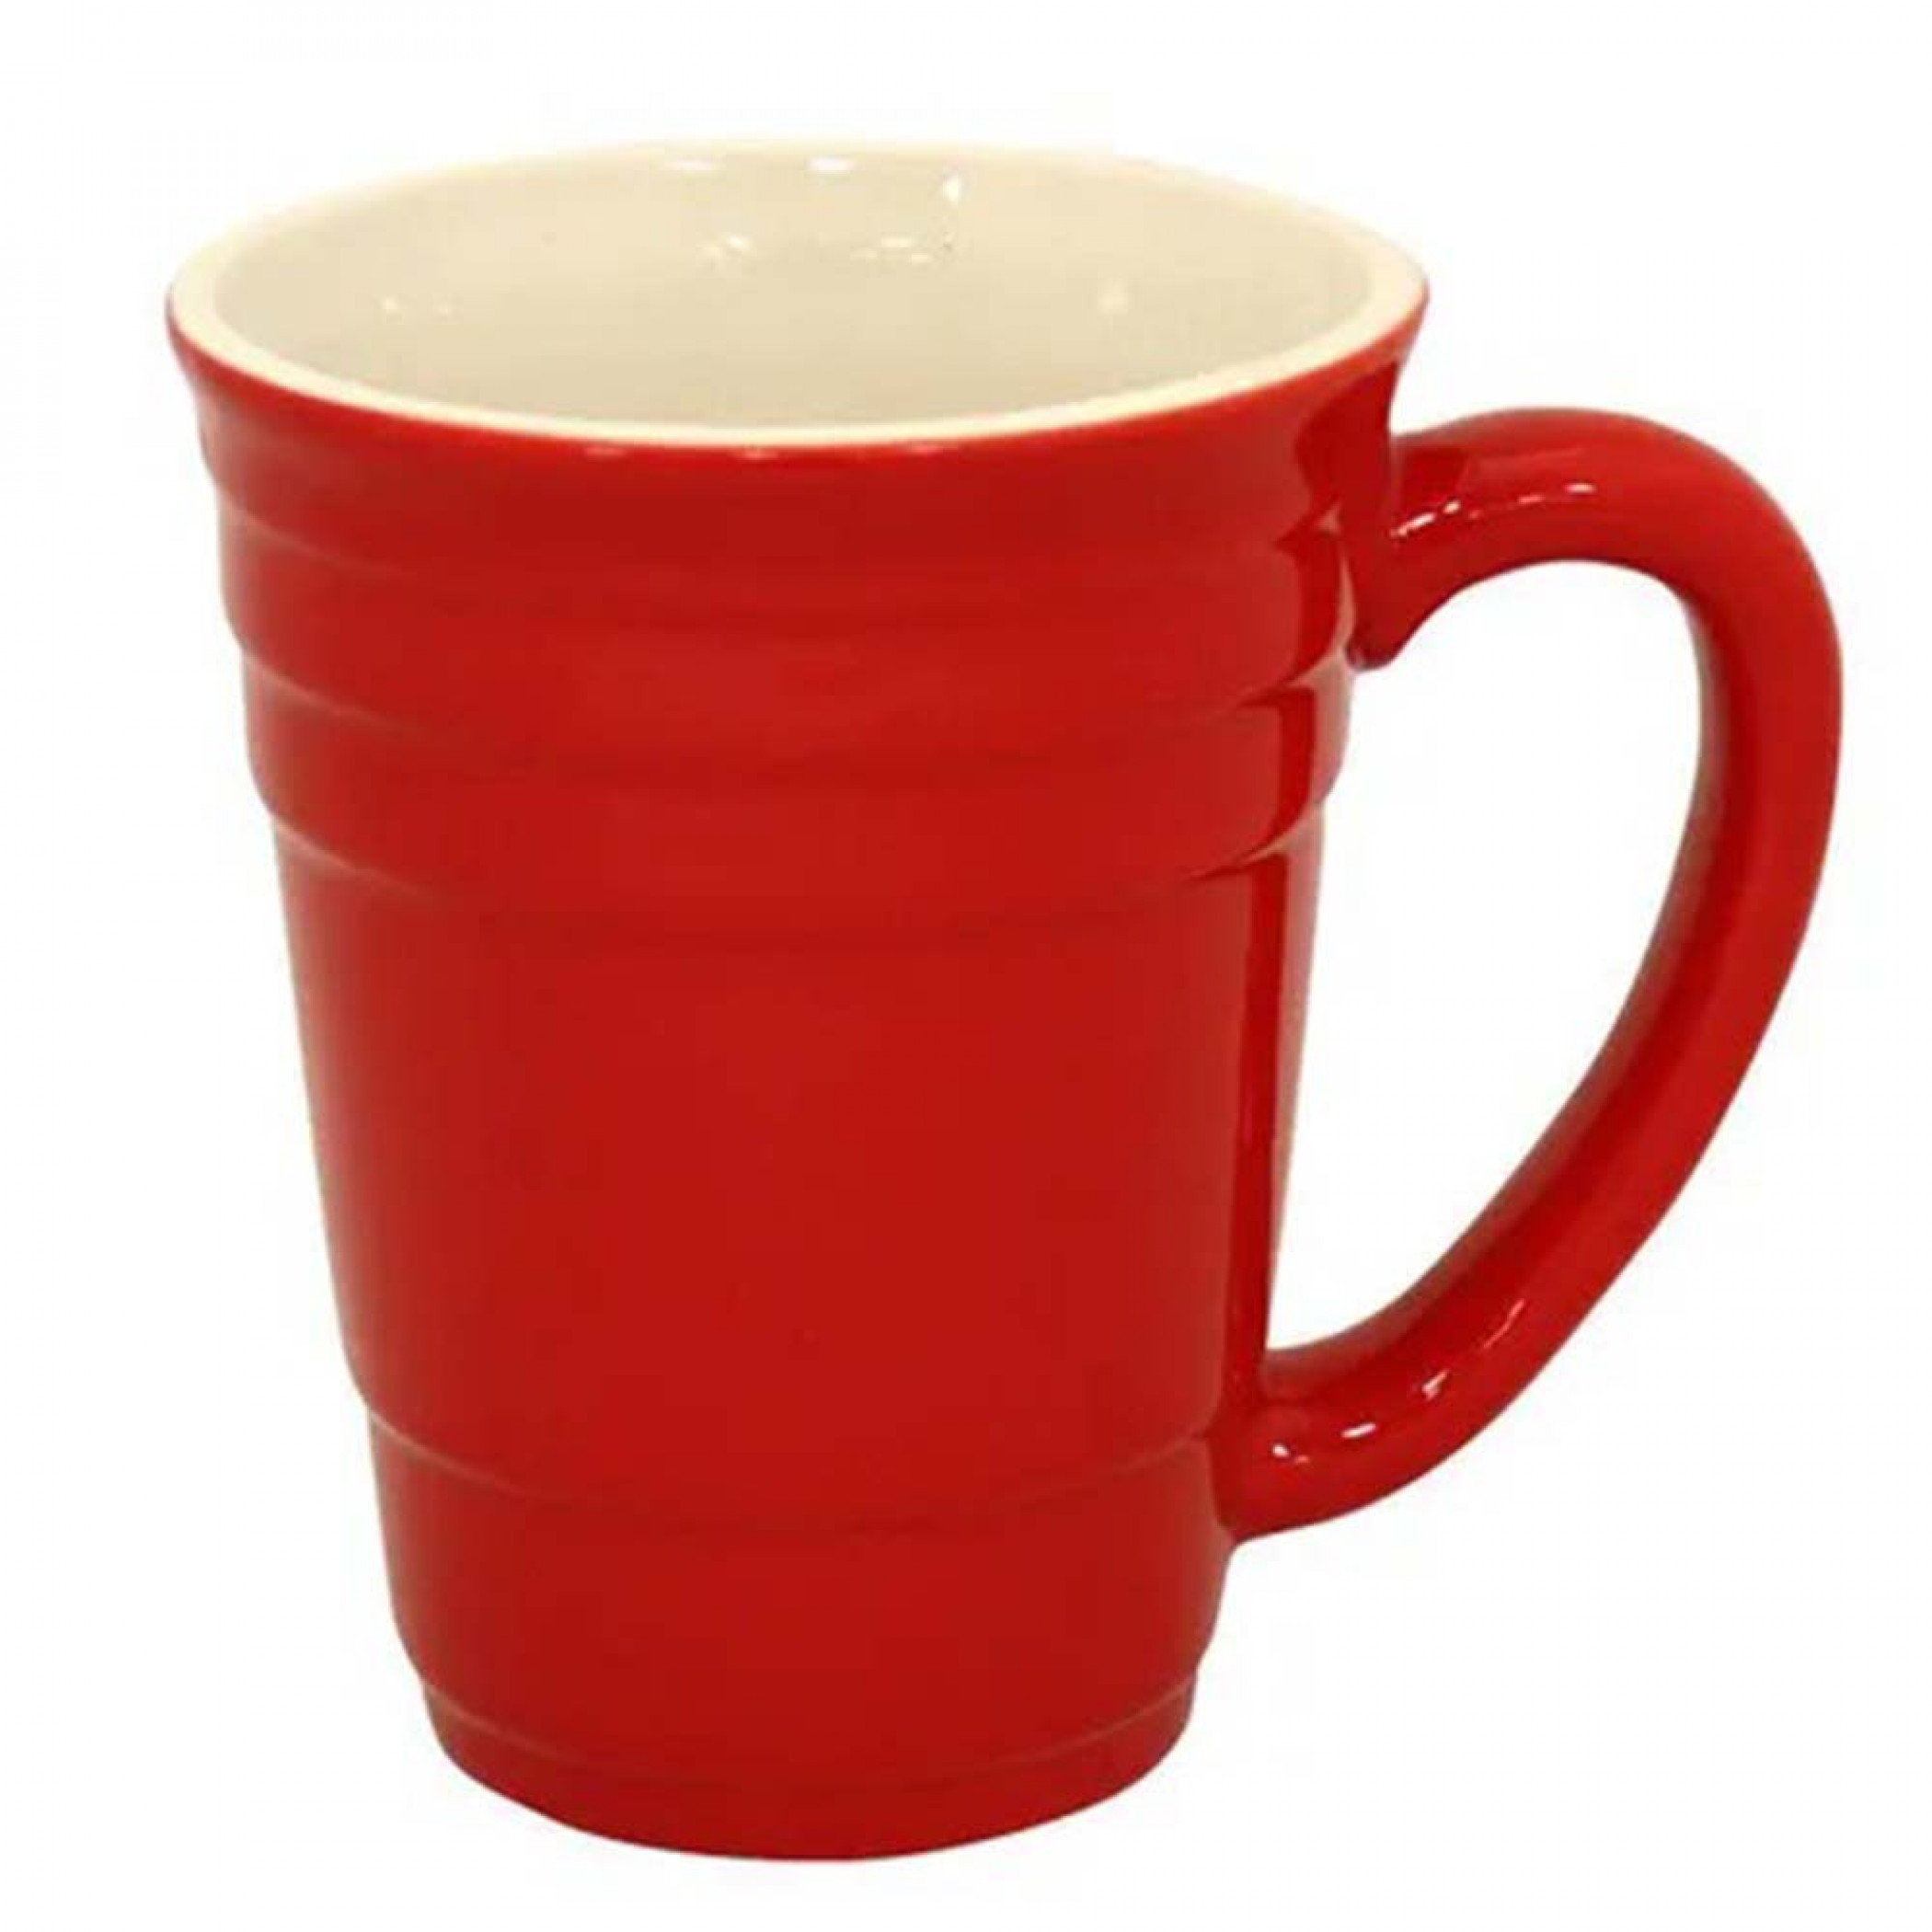 Red Party Cup 16oz Ceramic Mug